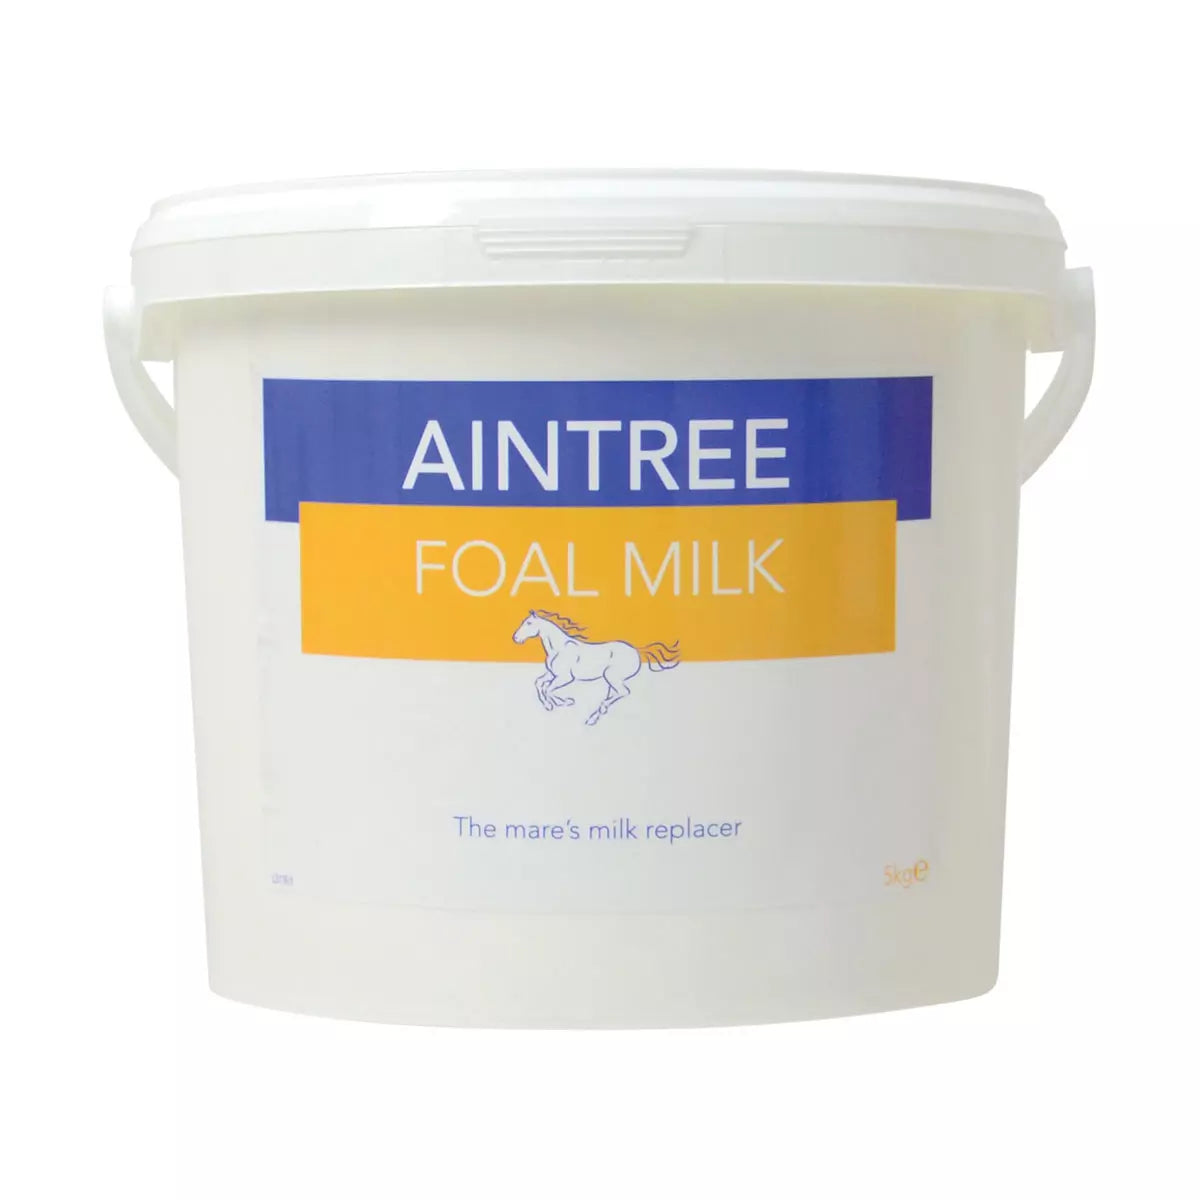 Aintree Foal Milk for Horses